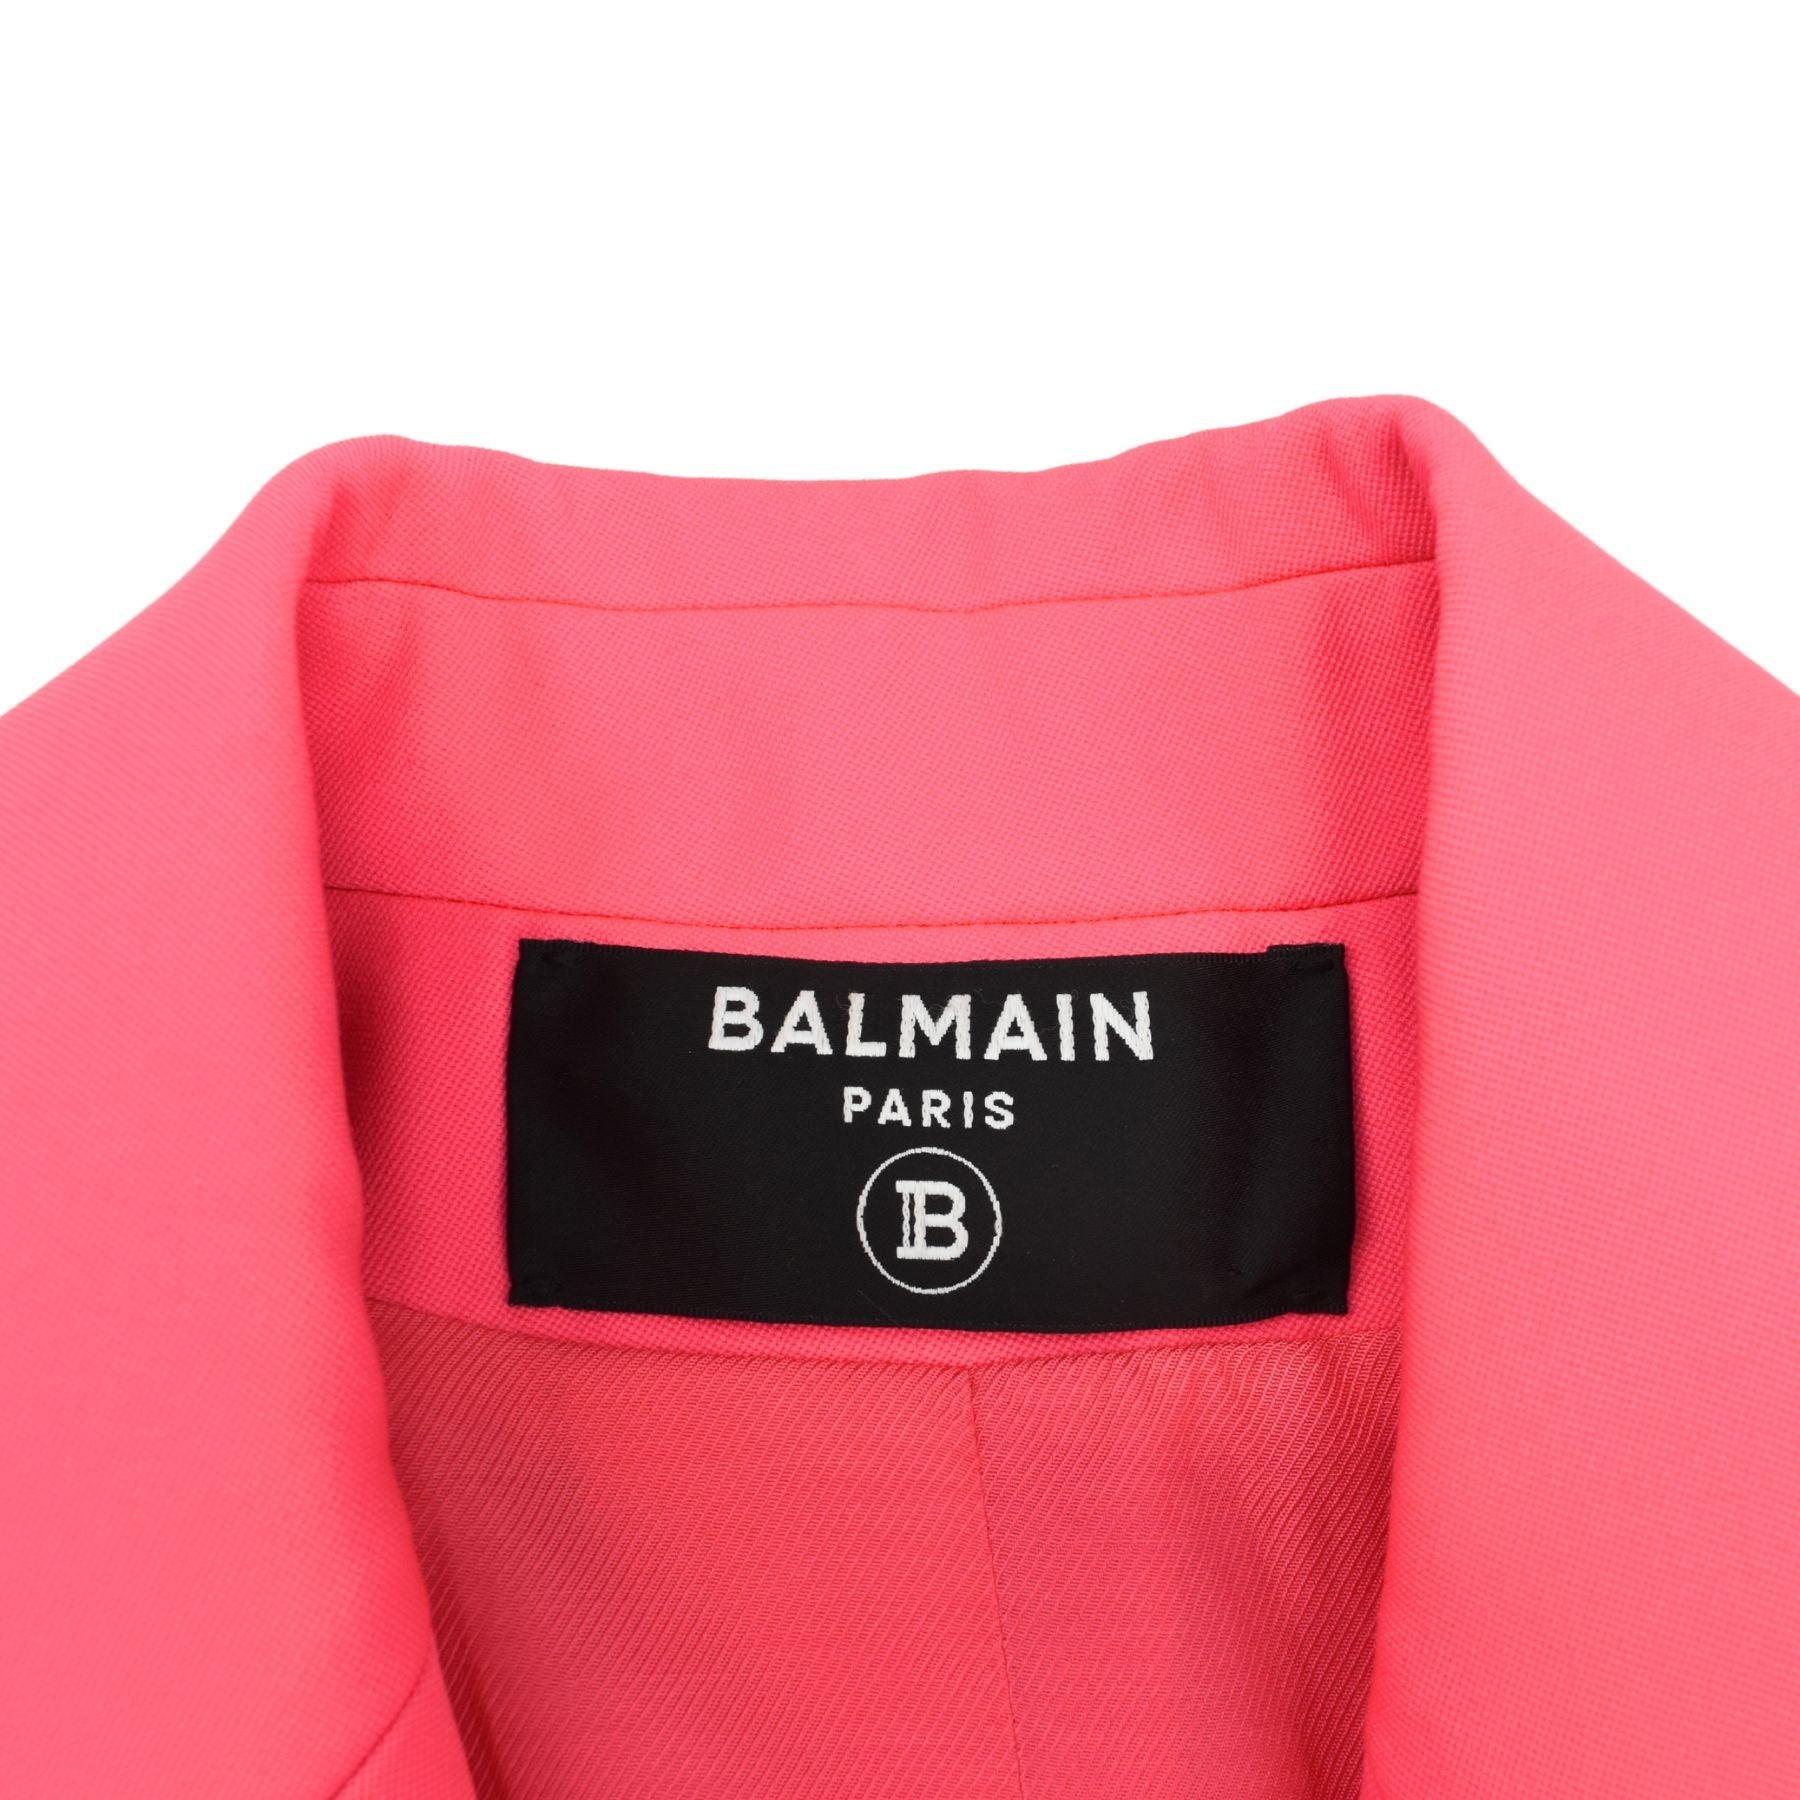 Balmain Blazer - Women's 36 - Fashionably Yours